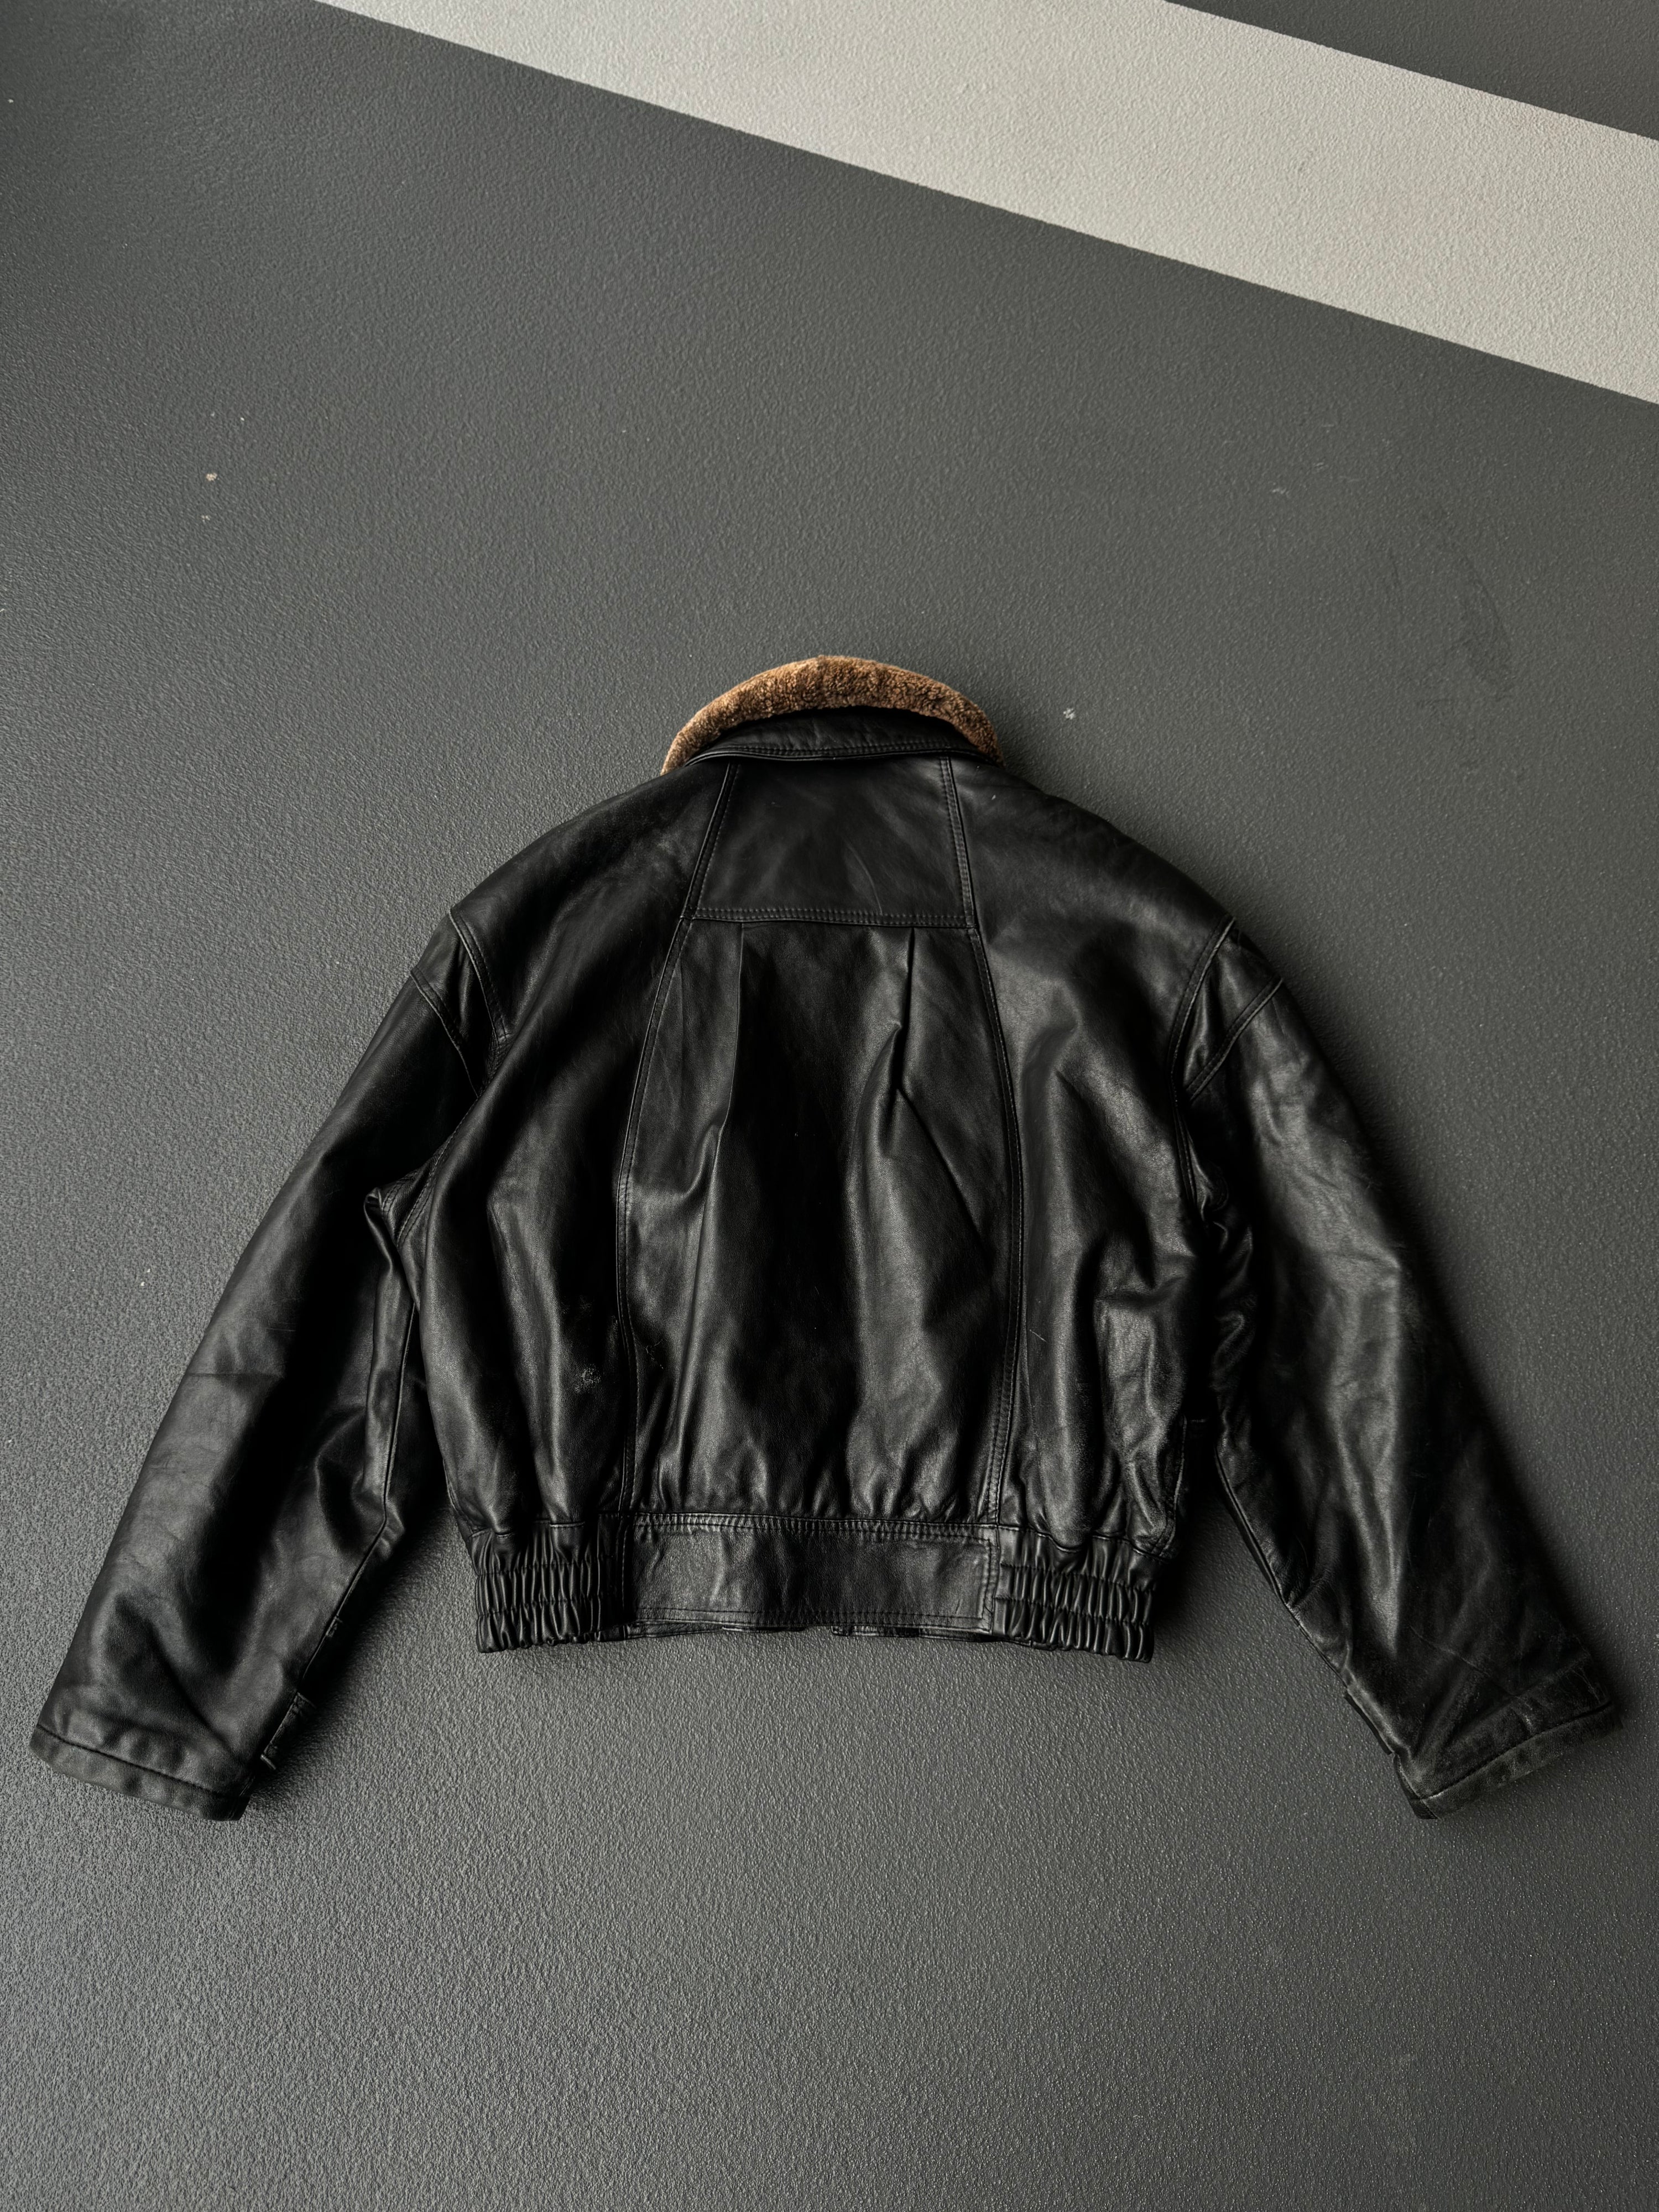 Vintage 80s/90s Heavy Leather Jacket (M)